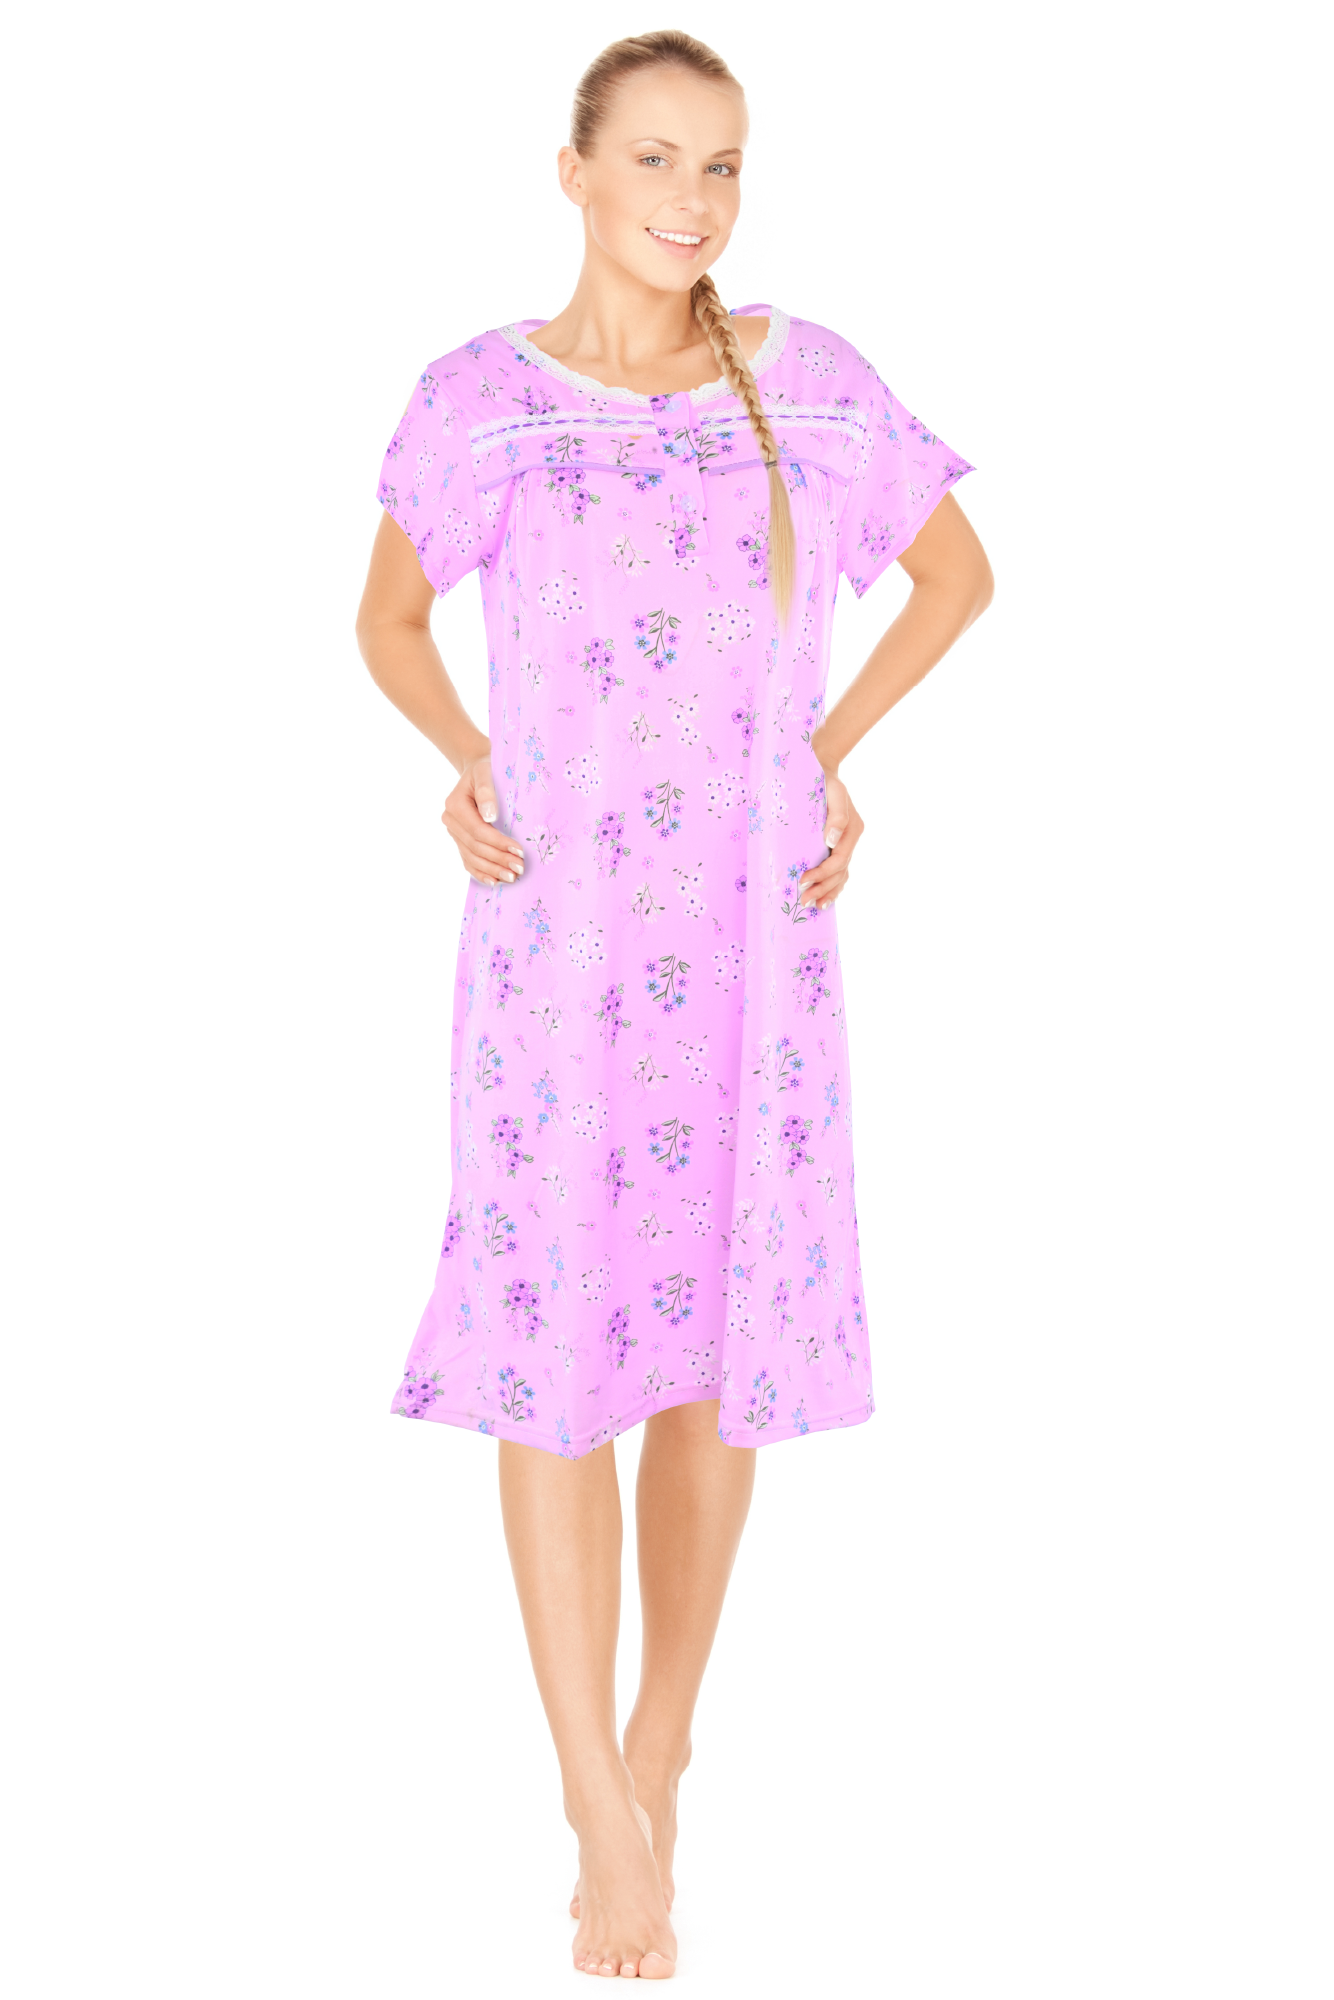 JEFFRICO Womens Nightgowns Sleepwear Soft Pajama Dress Nightshirts ...